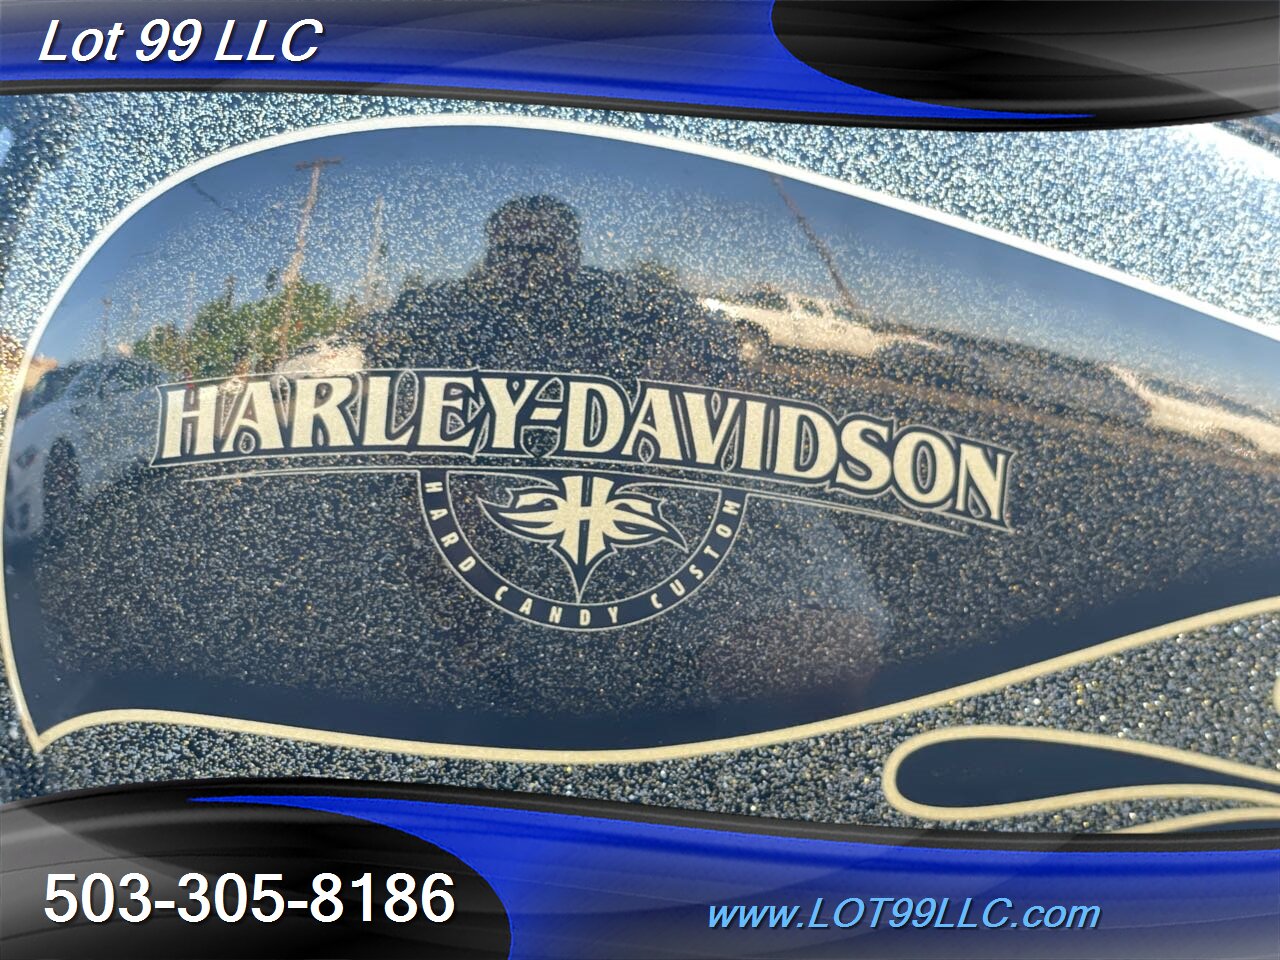 2016 Harley-Davidson Softail 103  **HARD CANDY CUSTOM** NEW TIRES,  HEAVY GOLD   - Photo 2 - Milwaukie, OR 97267